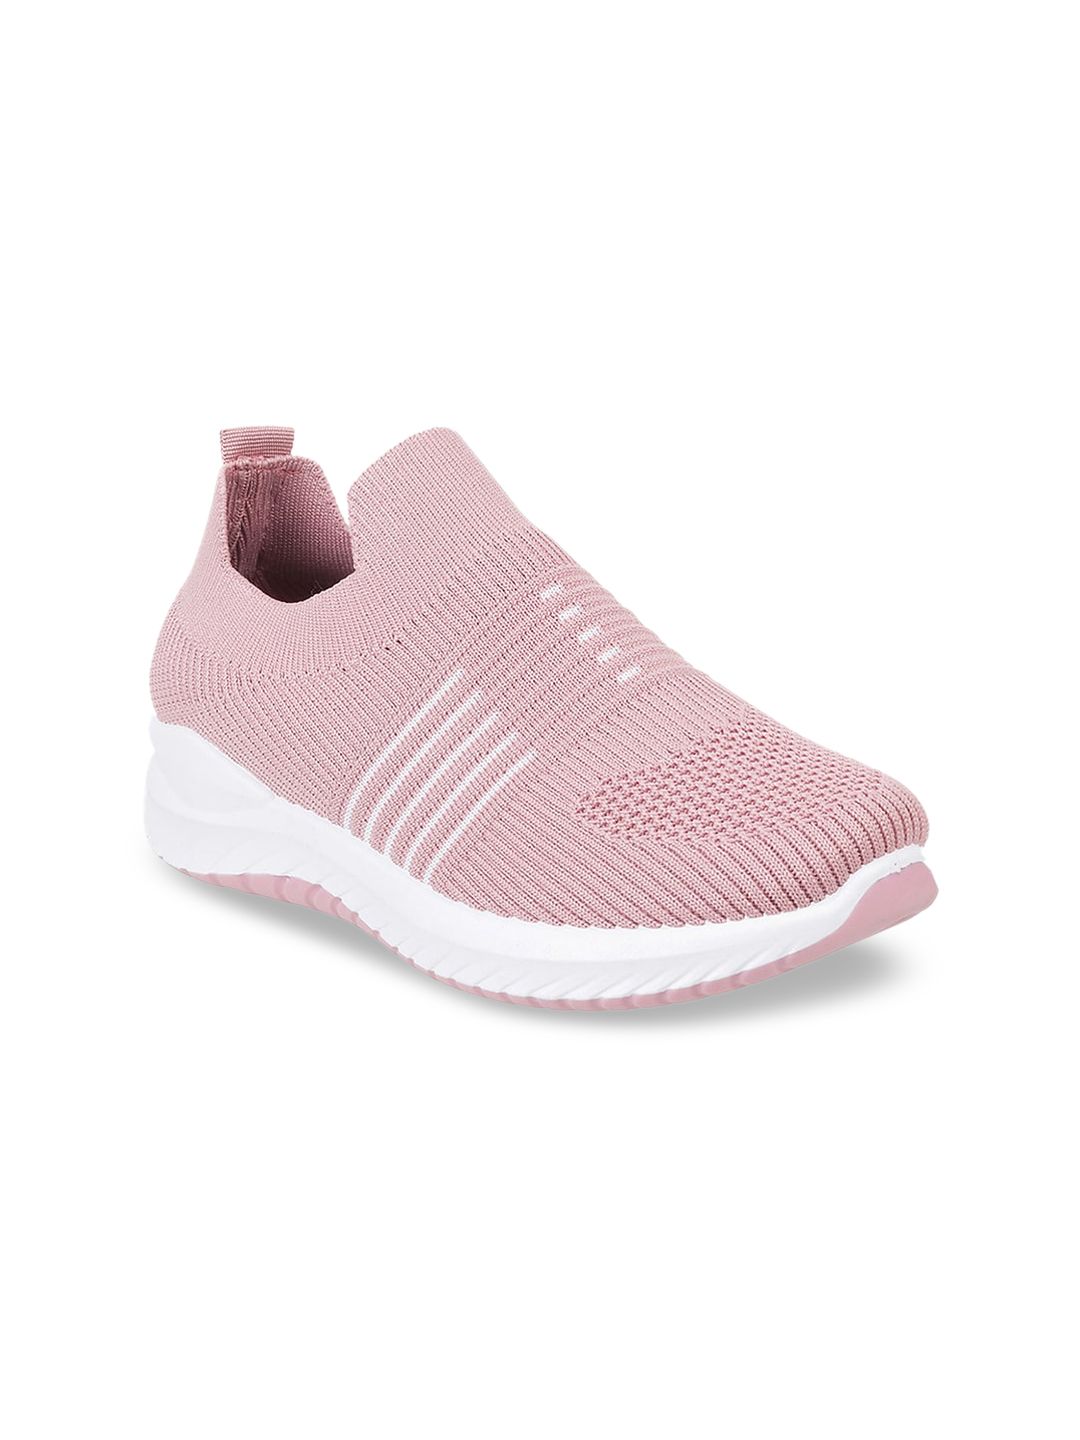 WALKWAY by Metro Women Pink Woven Design Sneakers Price in India